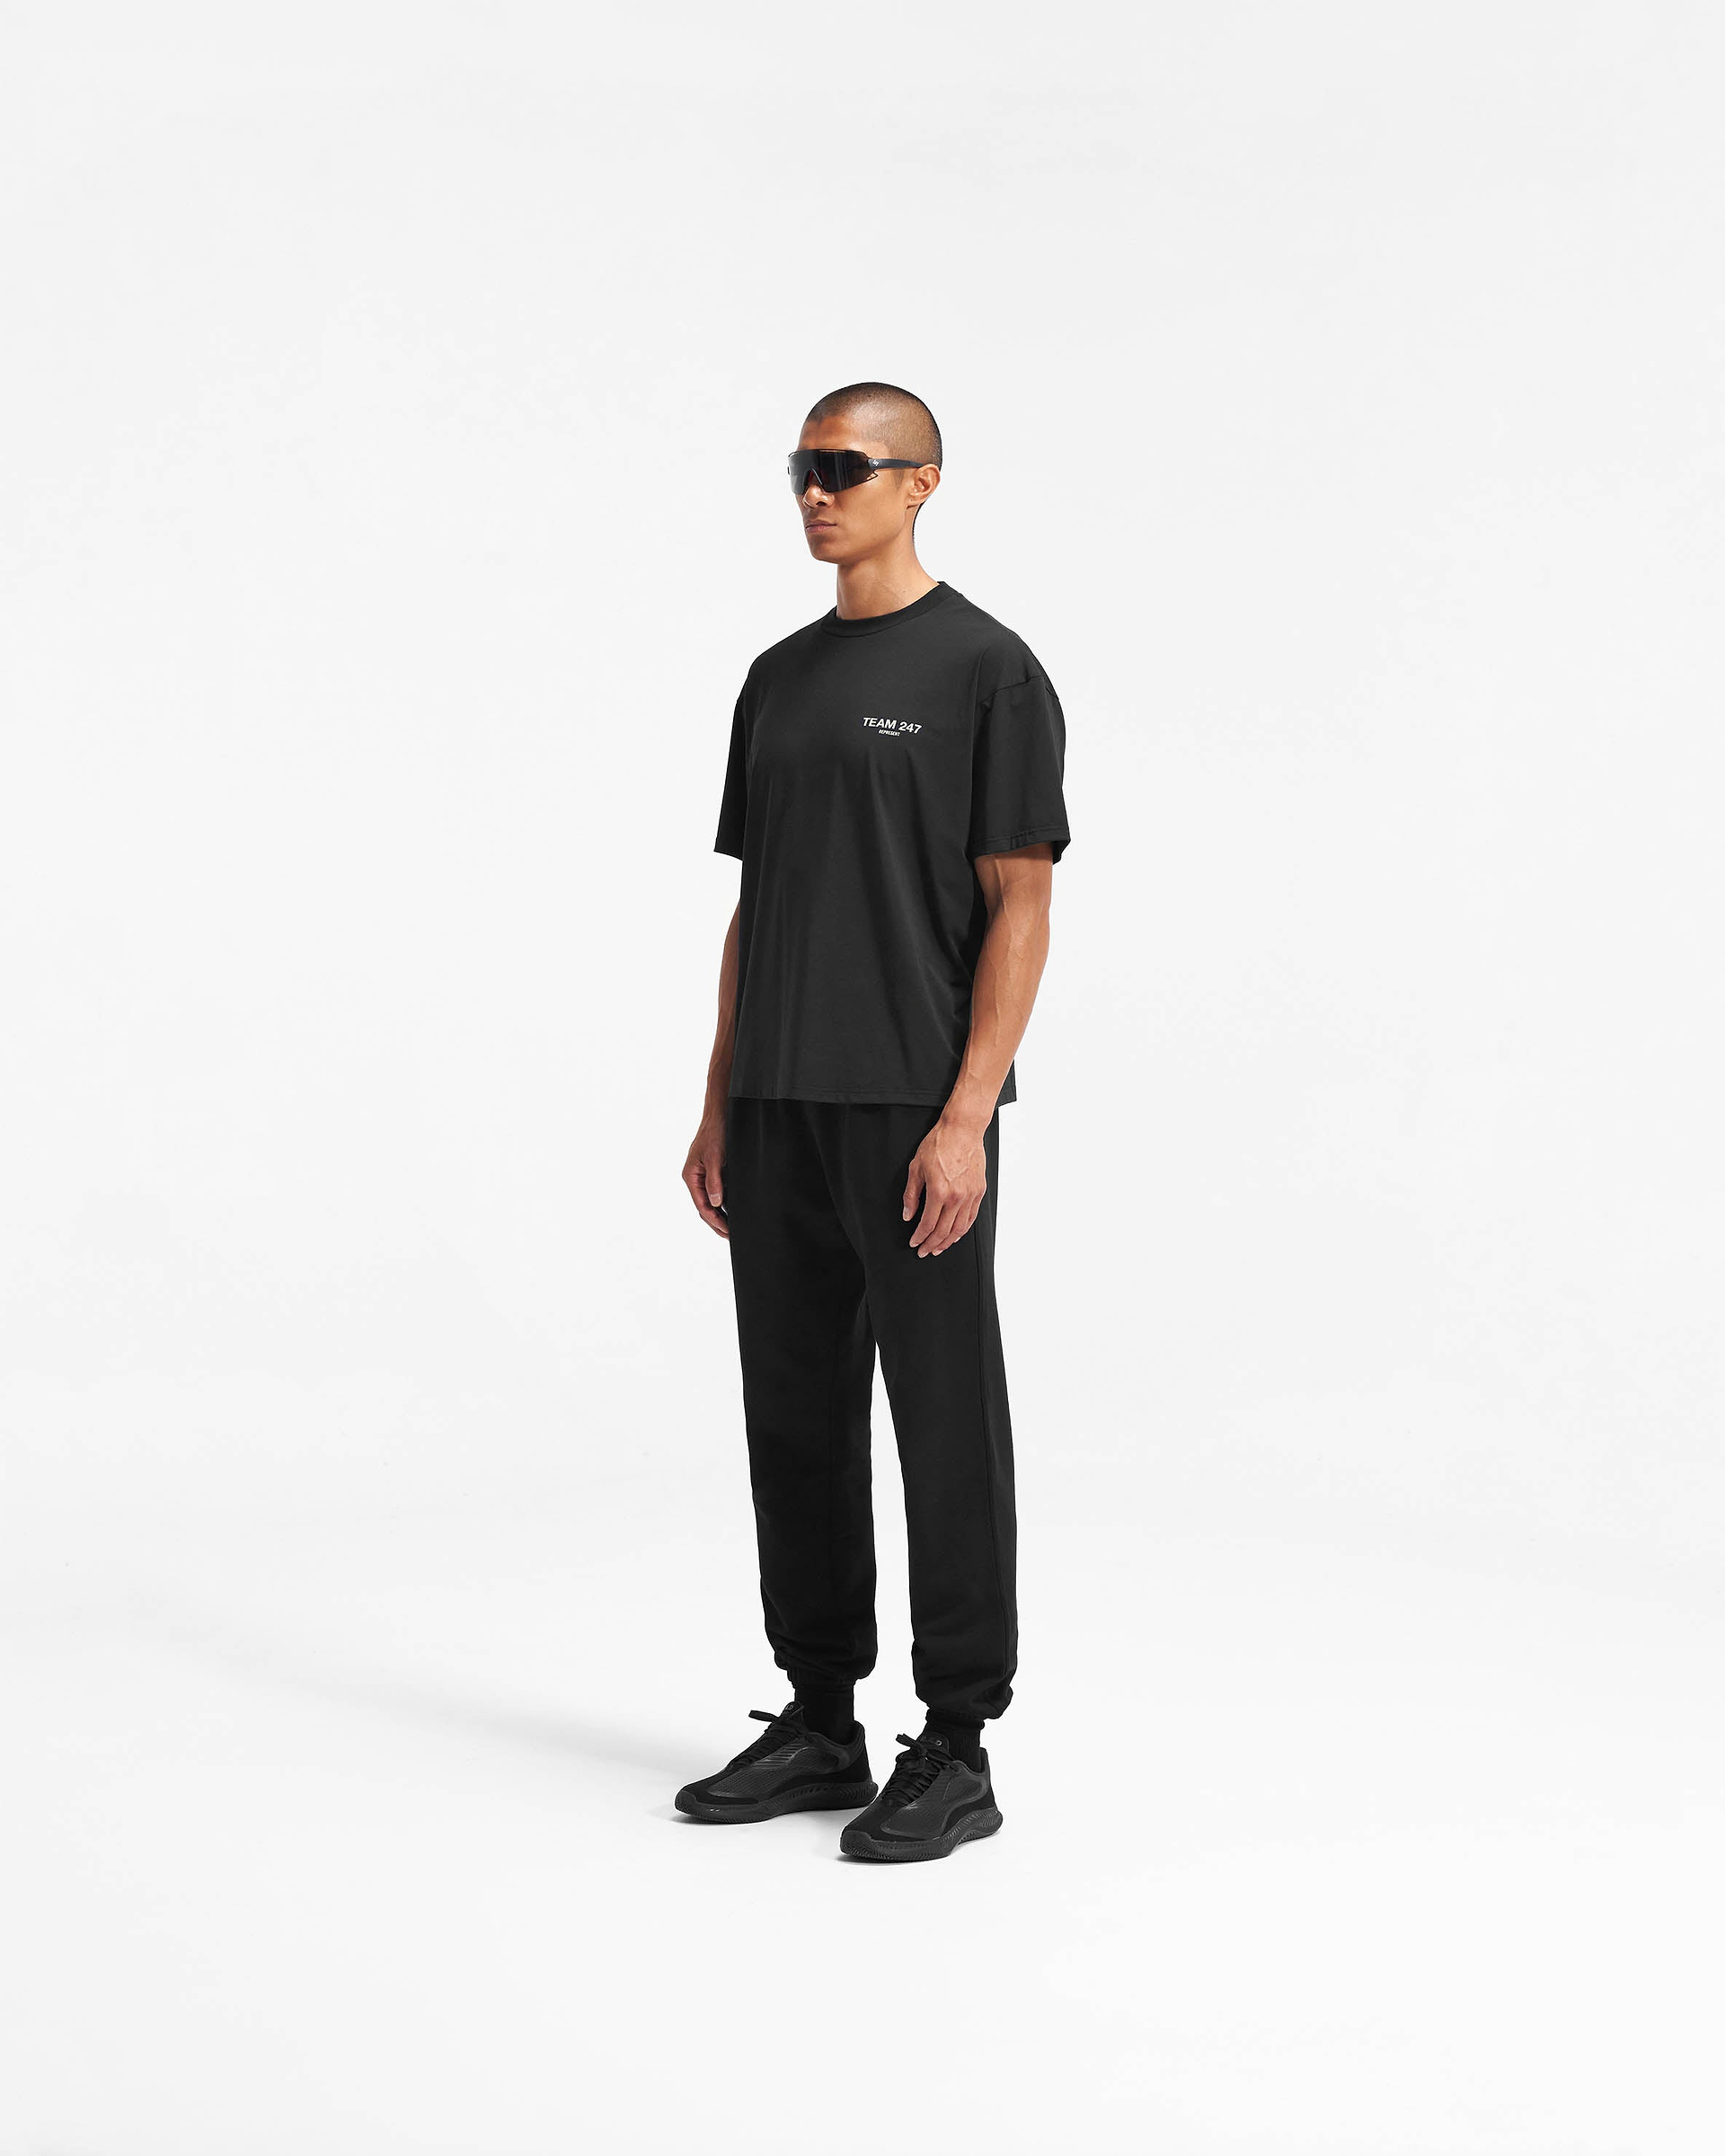 Black T-Shirt CLO | REPRESENT | Oversized 247 Team